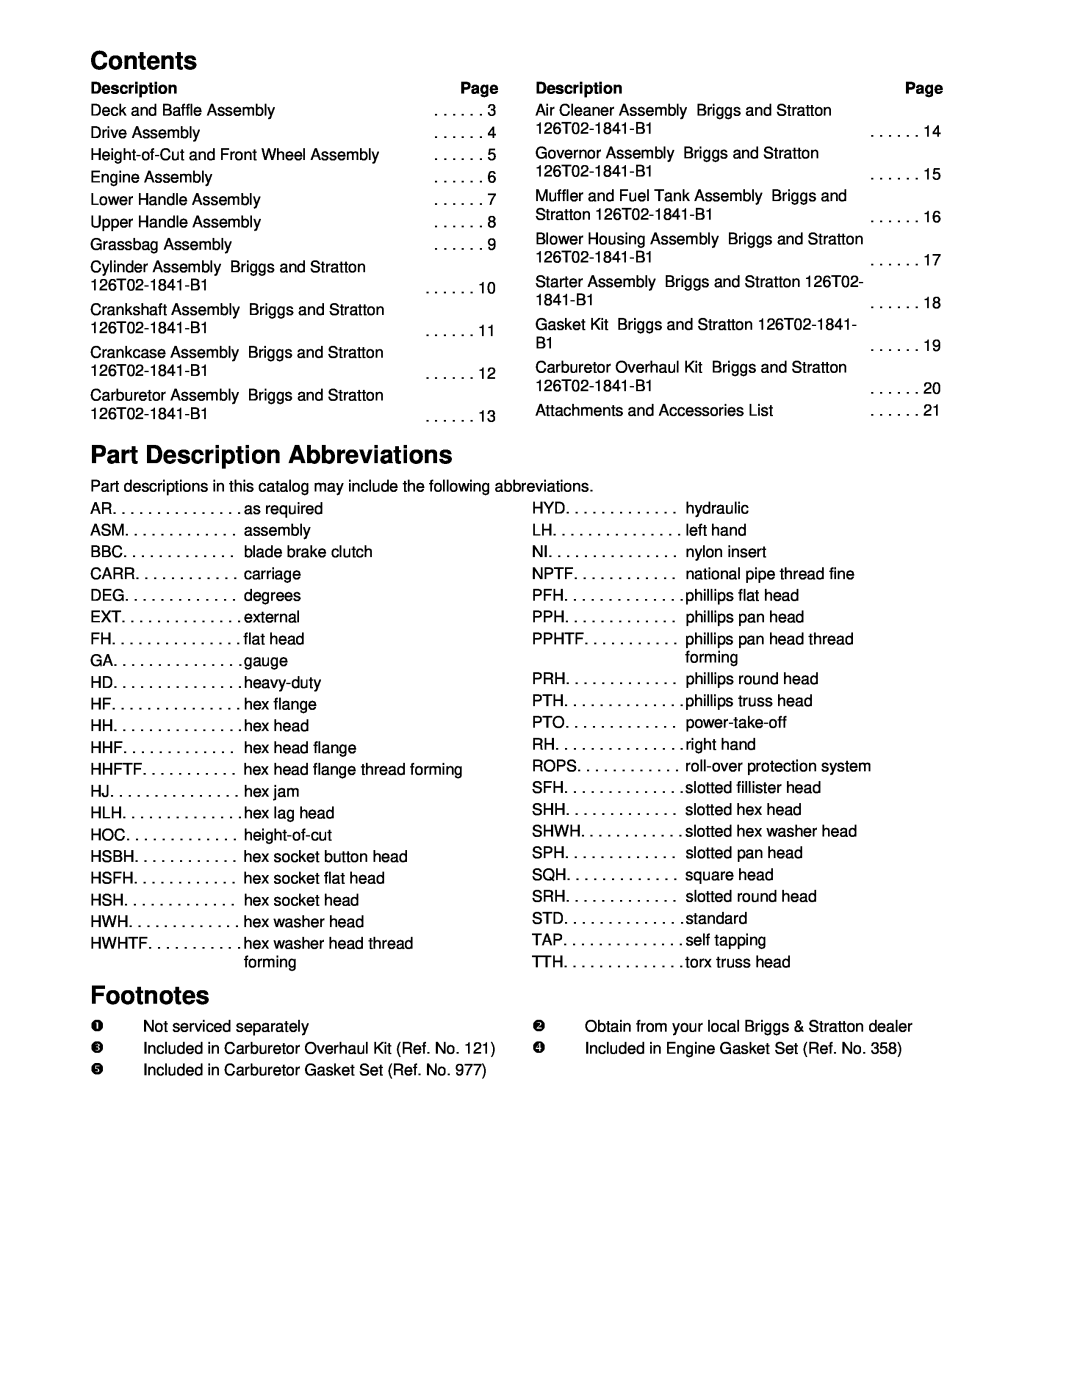 Hayter Mowers R48 manual Contents, Part Description Abbreviations, Footnotes, Page 